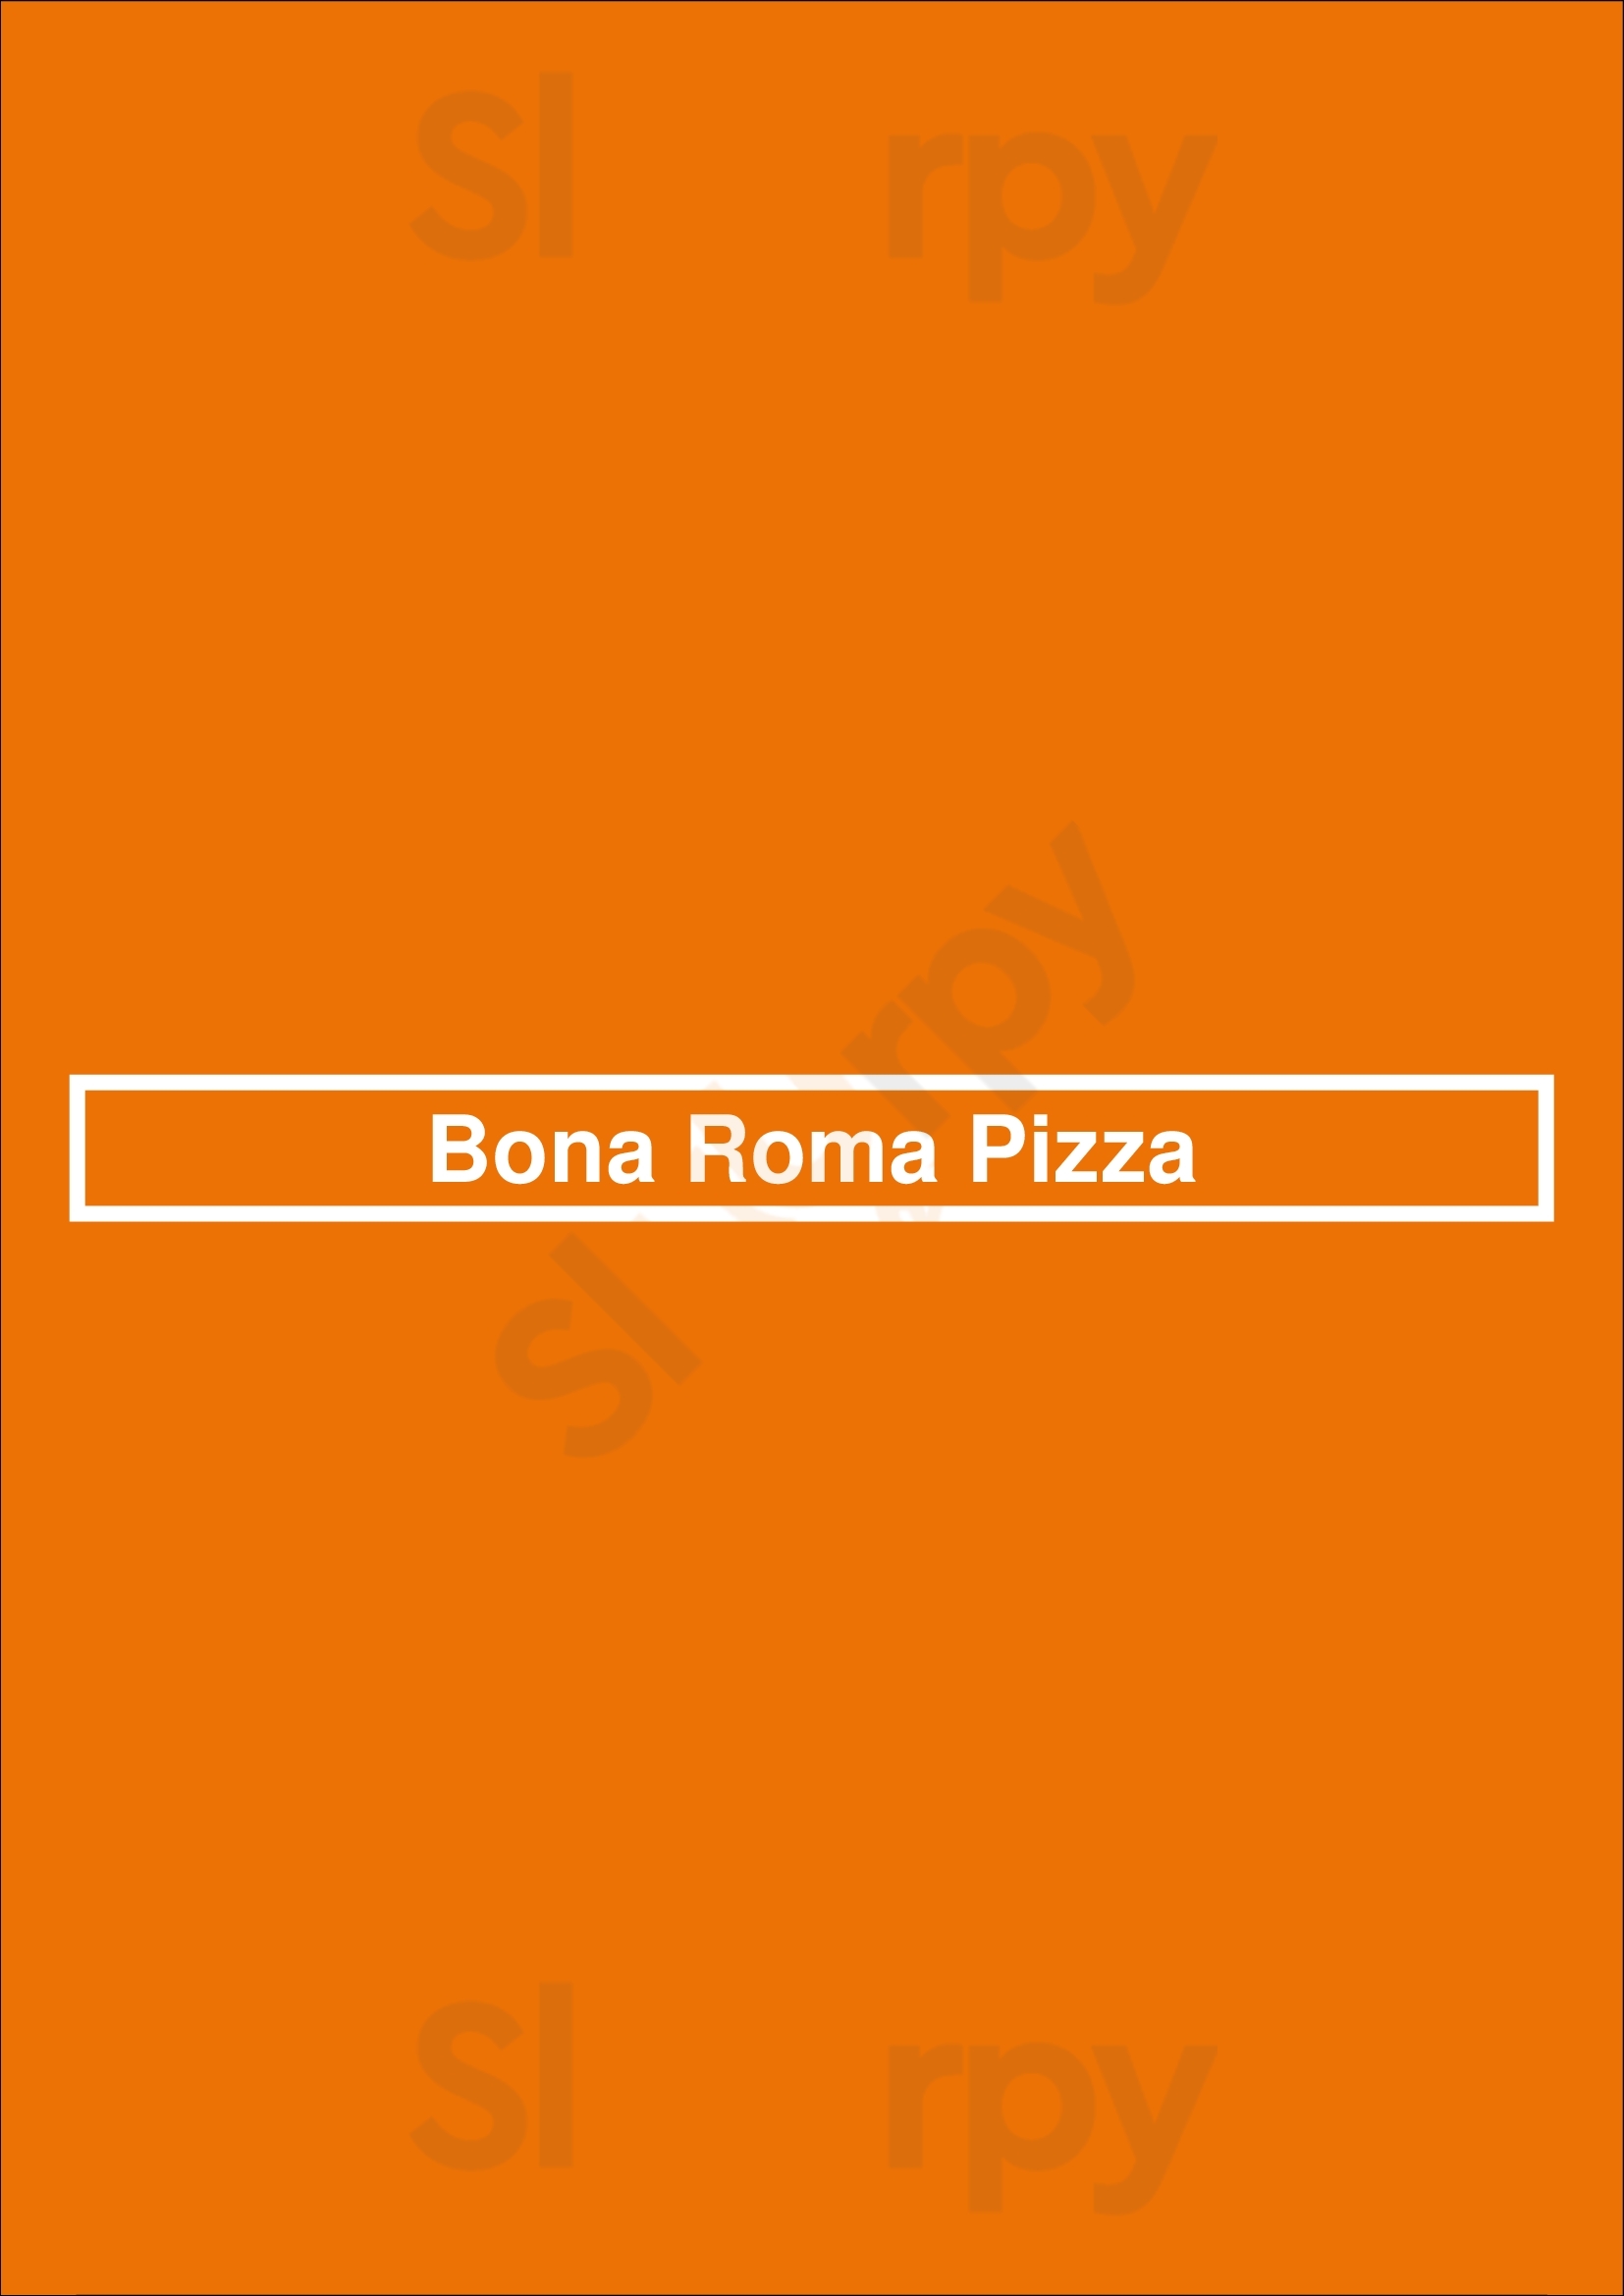 Bona Roma Pizza Calgary Menu - 1